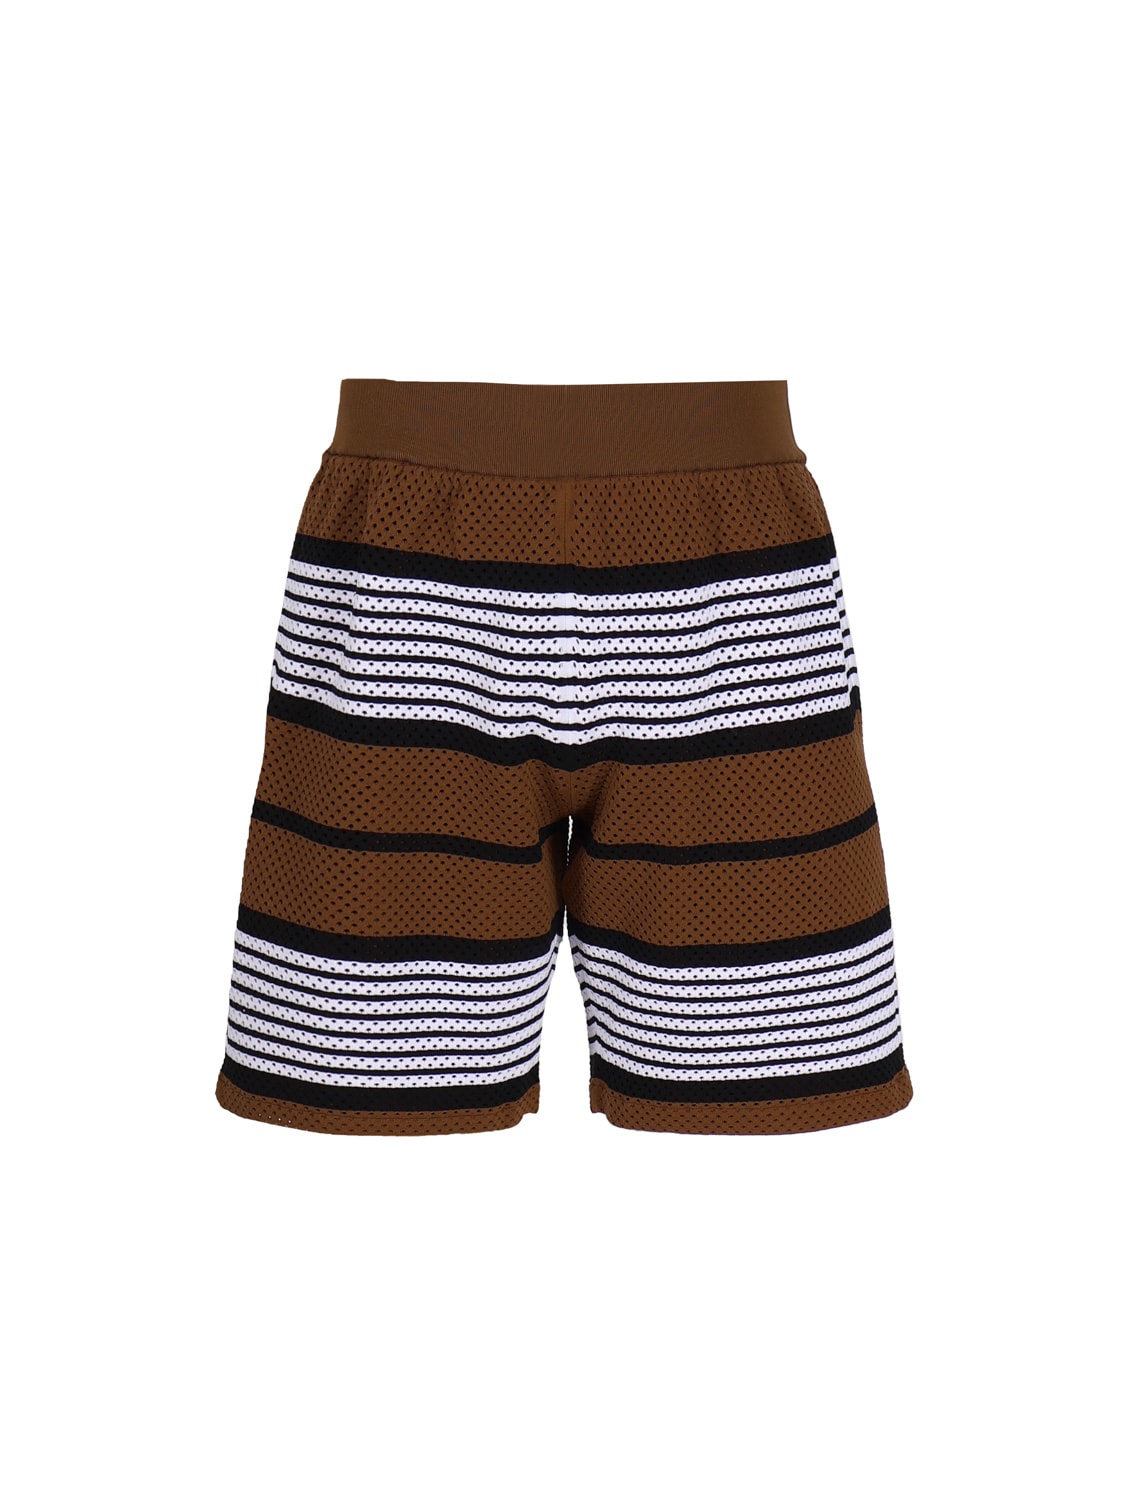 Burberry Nylon Shorts With Striped Print In Dark Birch Brown